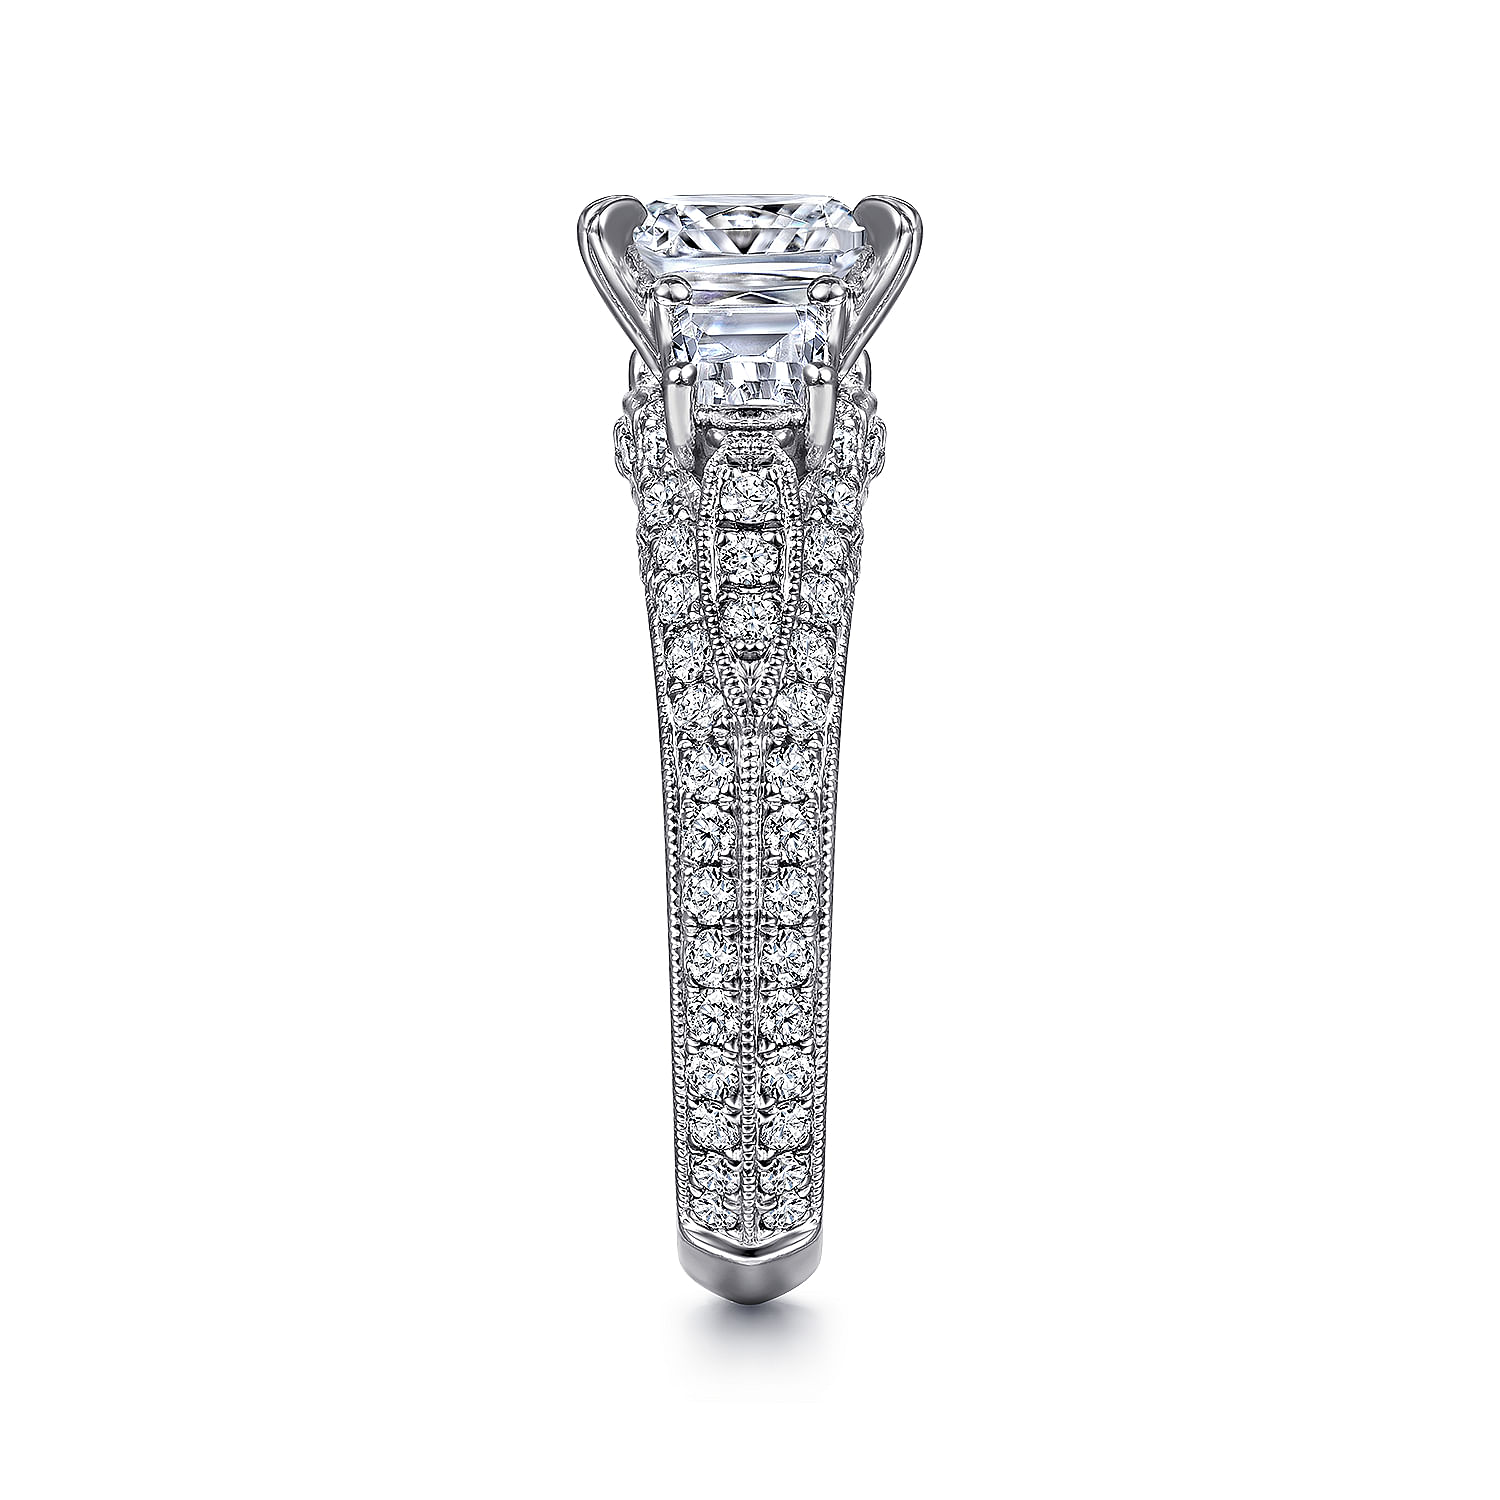 Vintage Inspired 18K White Gold Princess Cut Three Stone Diamond Engagement Ring